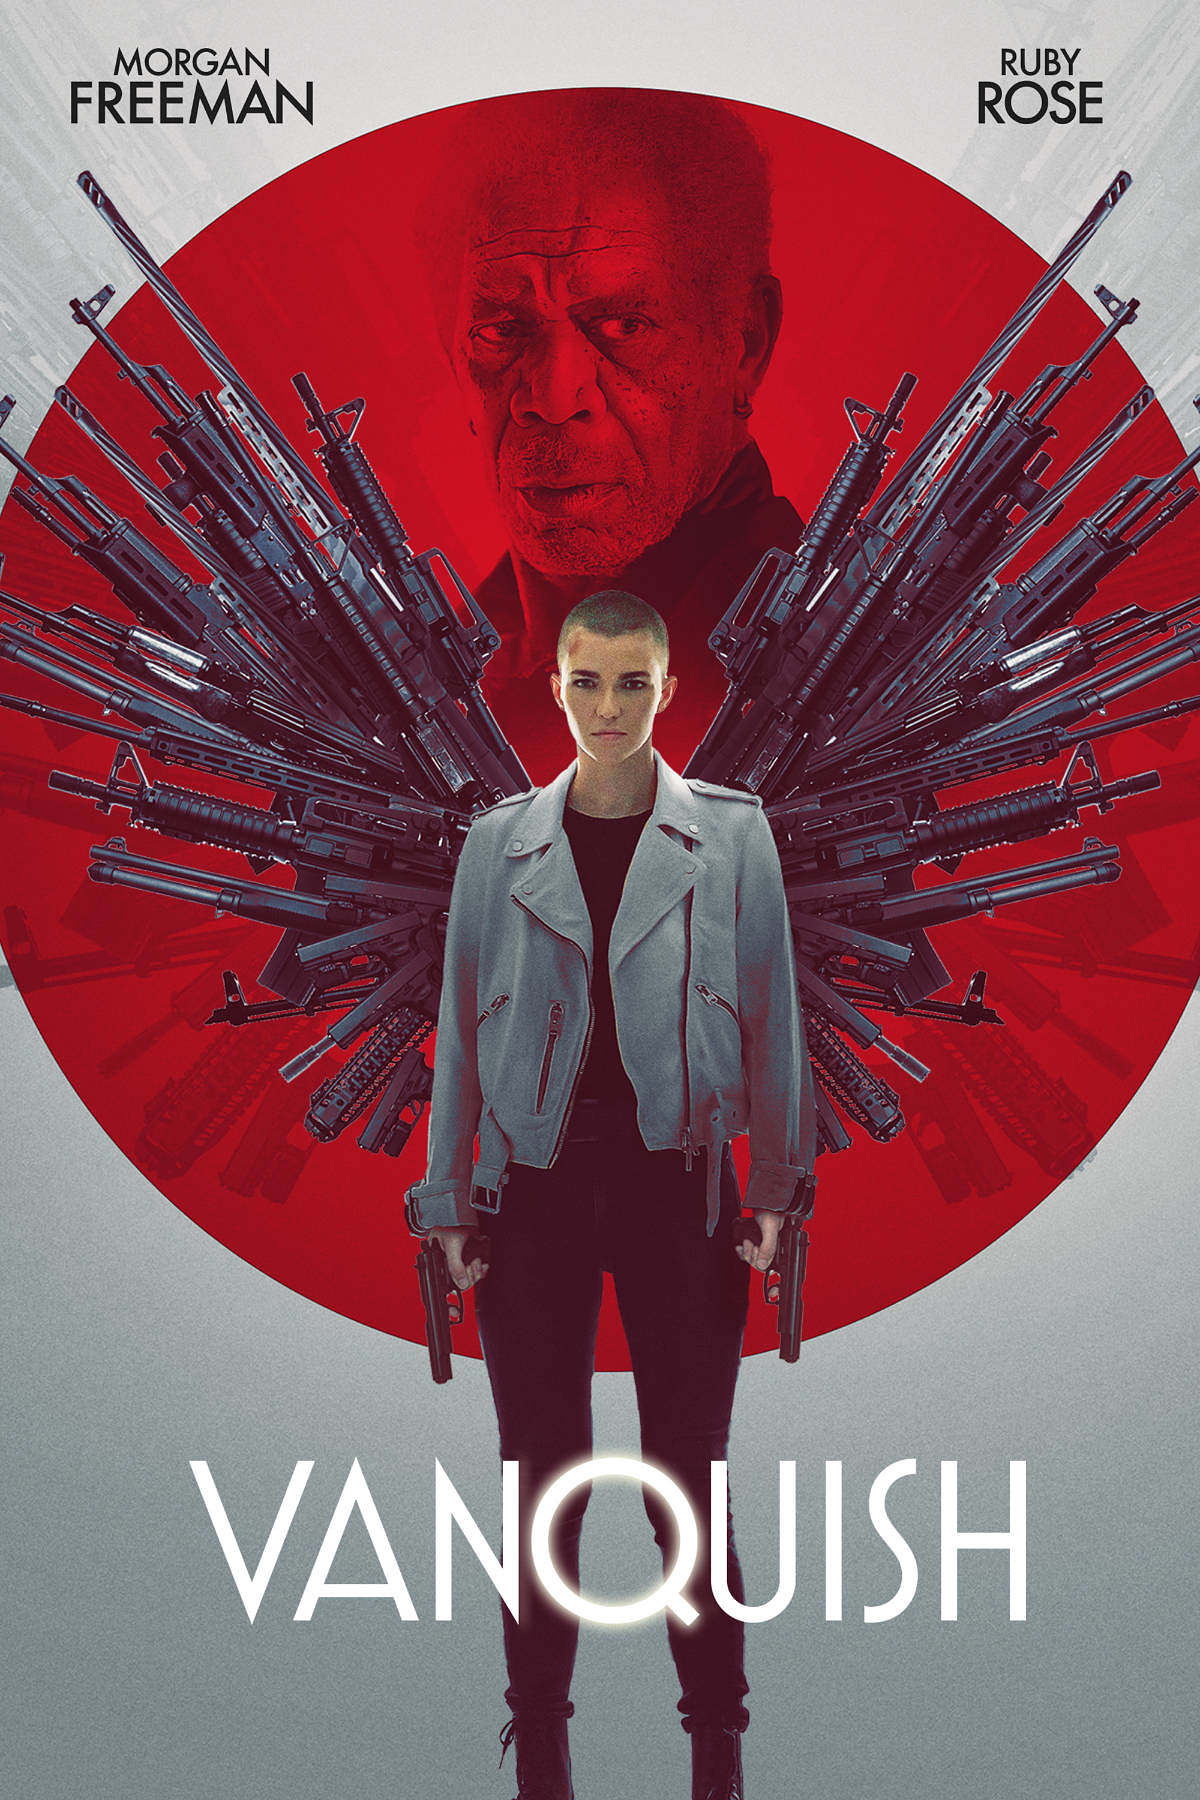 1st Trailer For 'Vanquish' Movie Starring Morgan Freeman & Ruby Rose